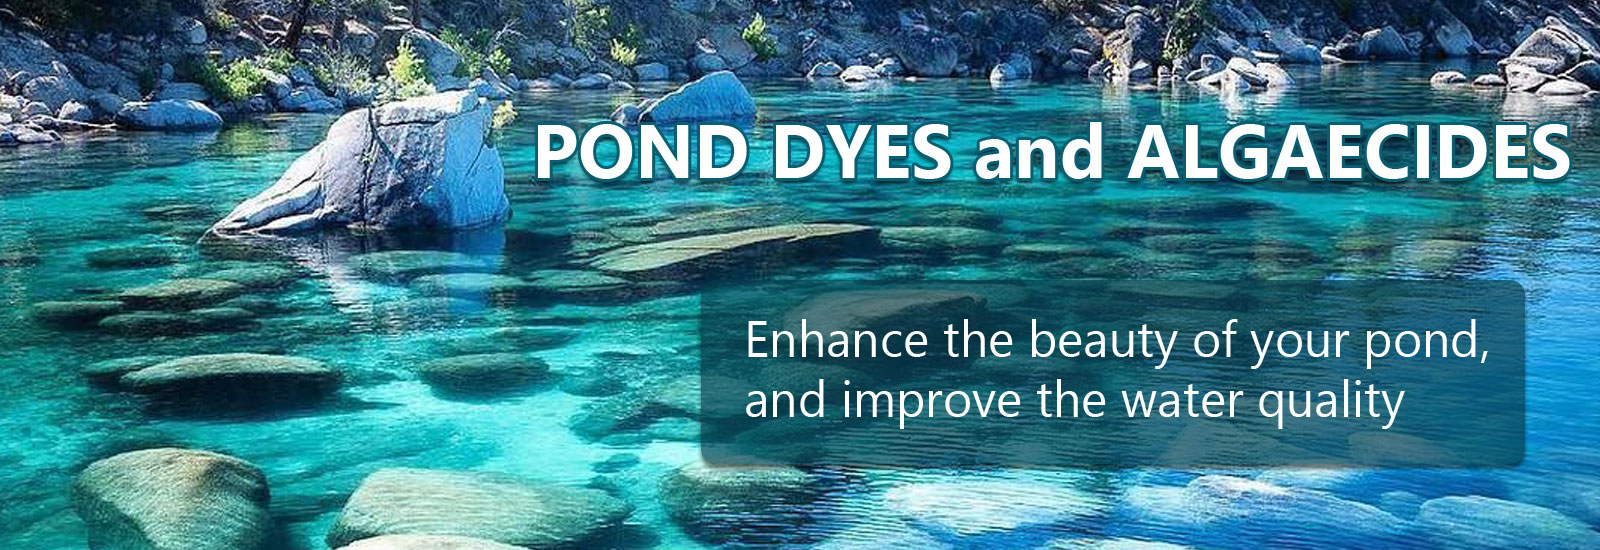 Pond Dyes and Algaecides